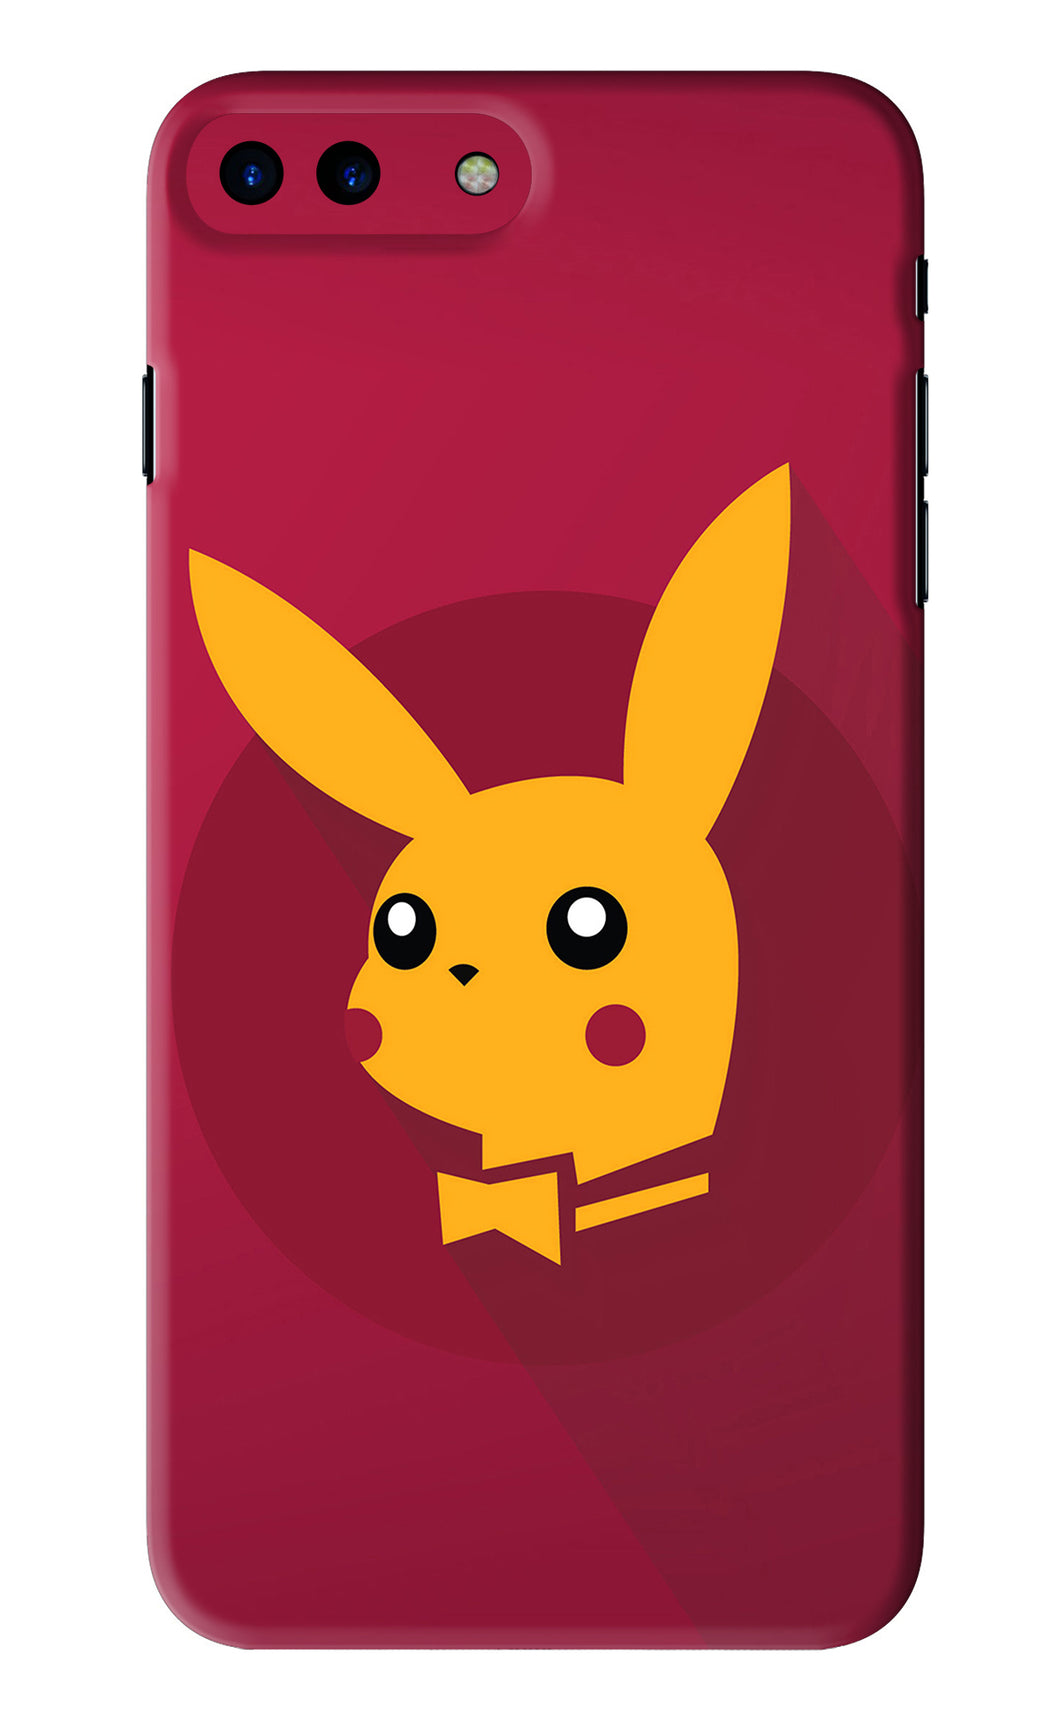 Pikachu iPhone 8 Plus Back Skin Wrap